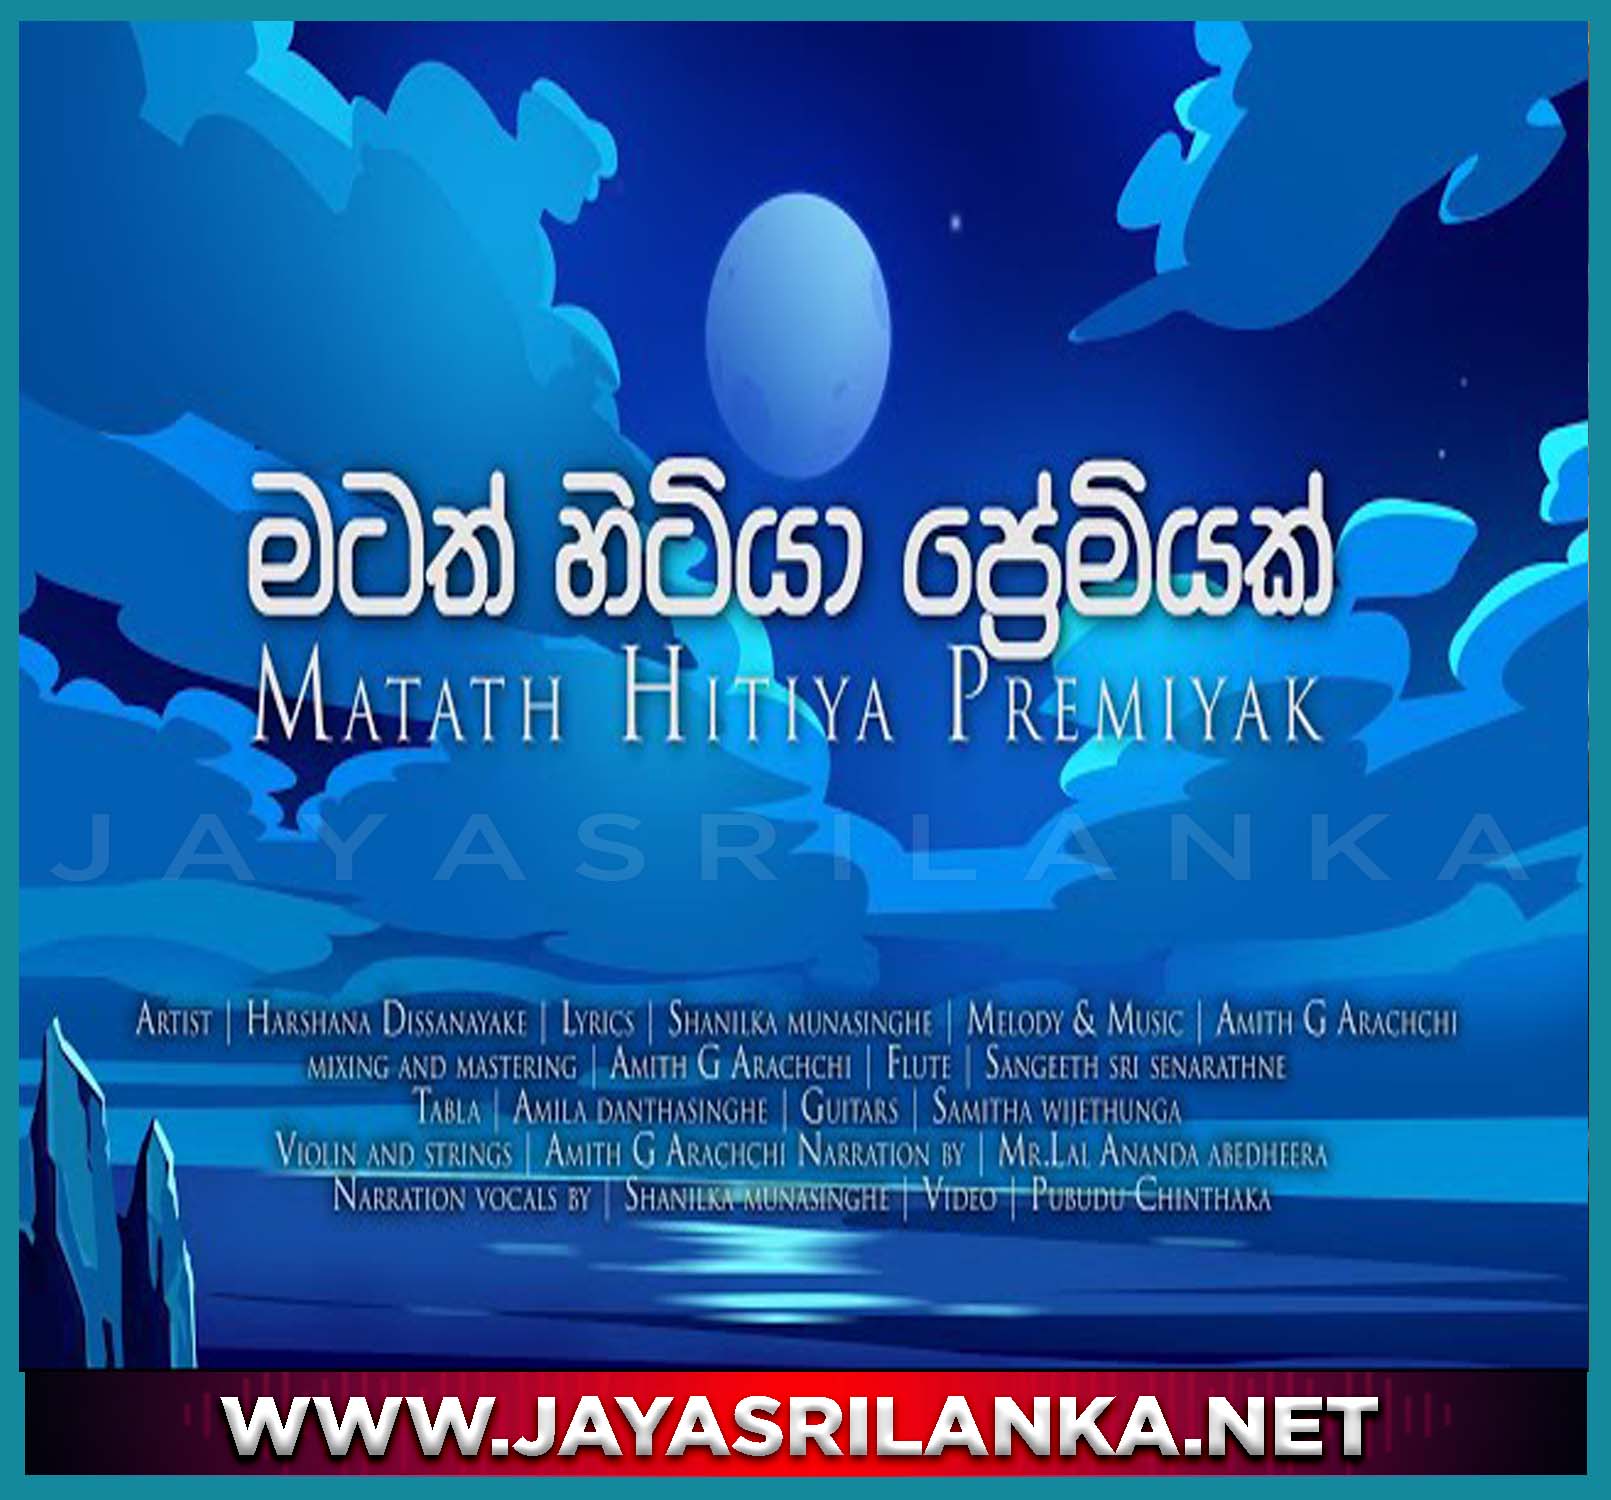 Matath Hitiya Premiyak